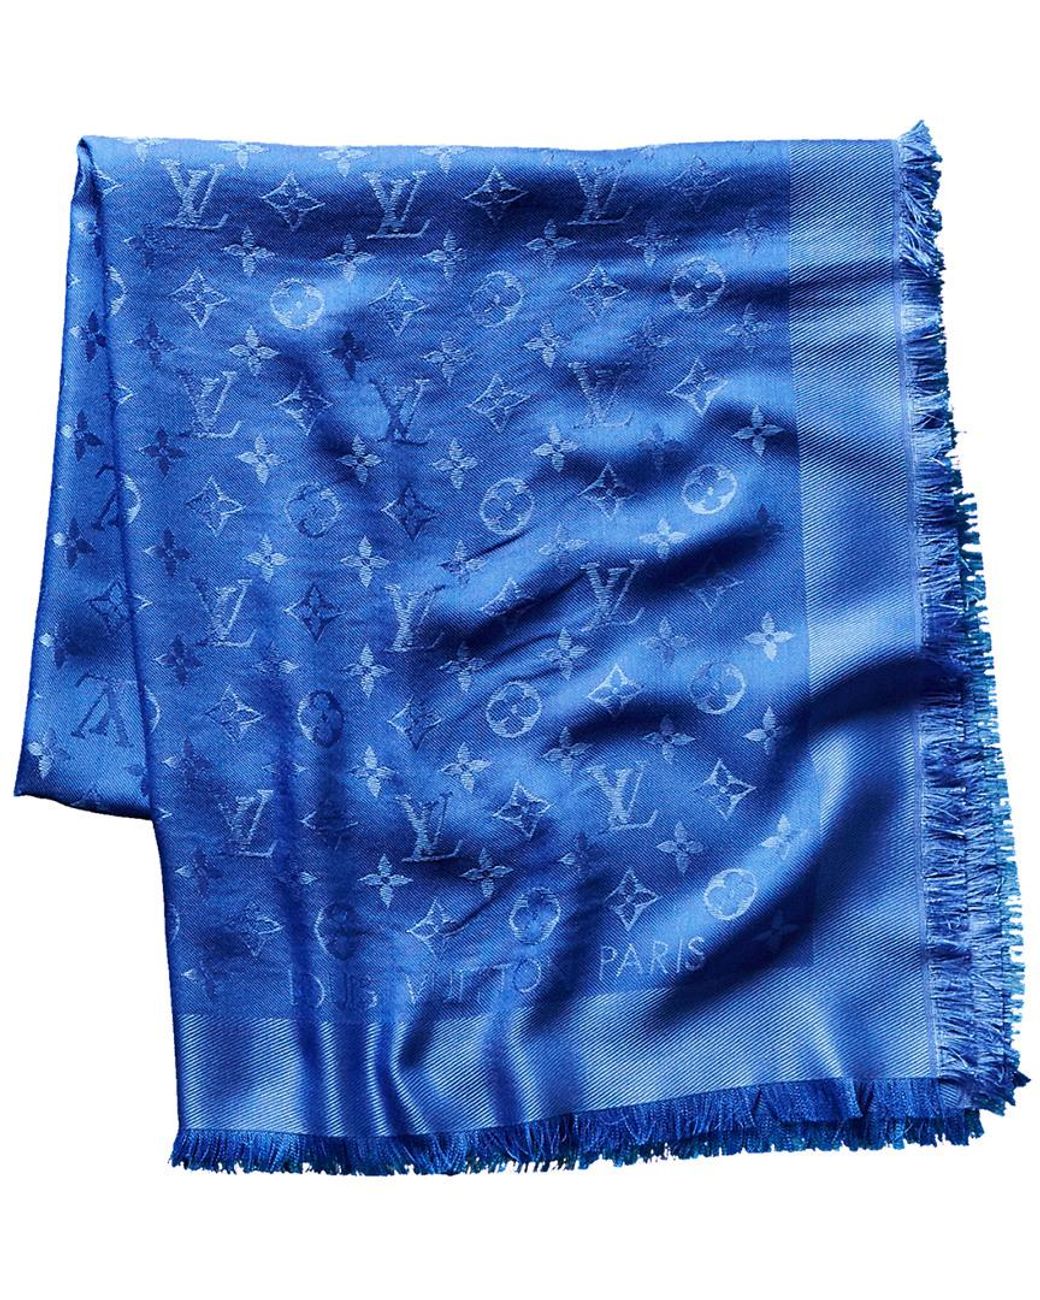 royal blue lv bag